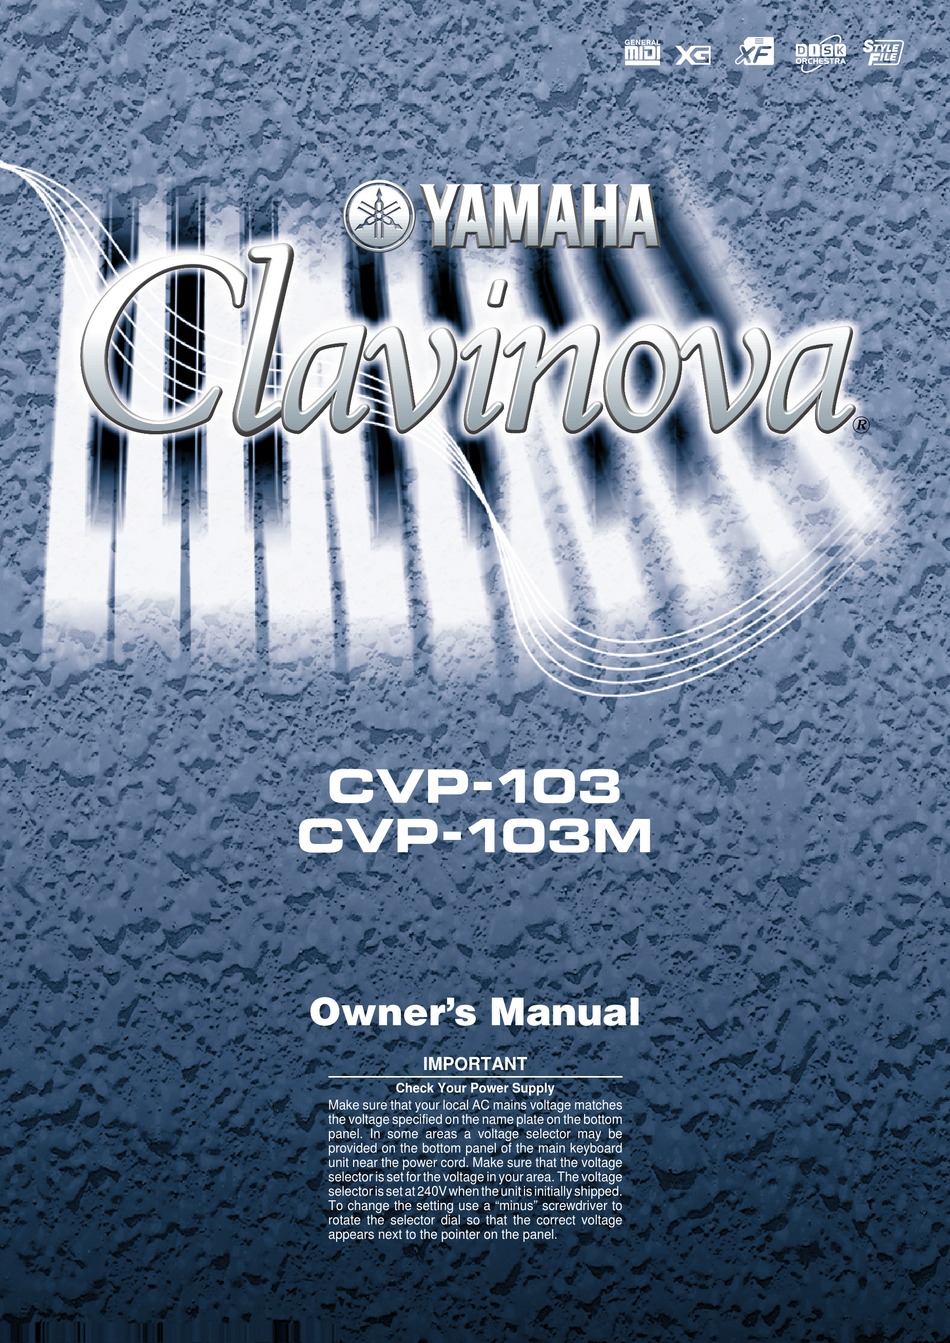 YAMAHA CLAVINOVA CVP-103 OWNER'S MANUAL Pdf Download | ManualsLib